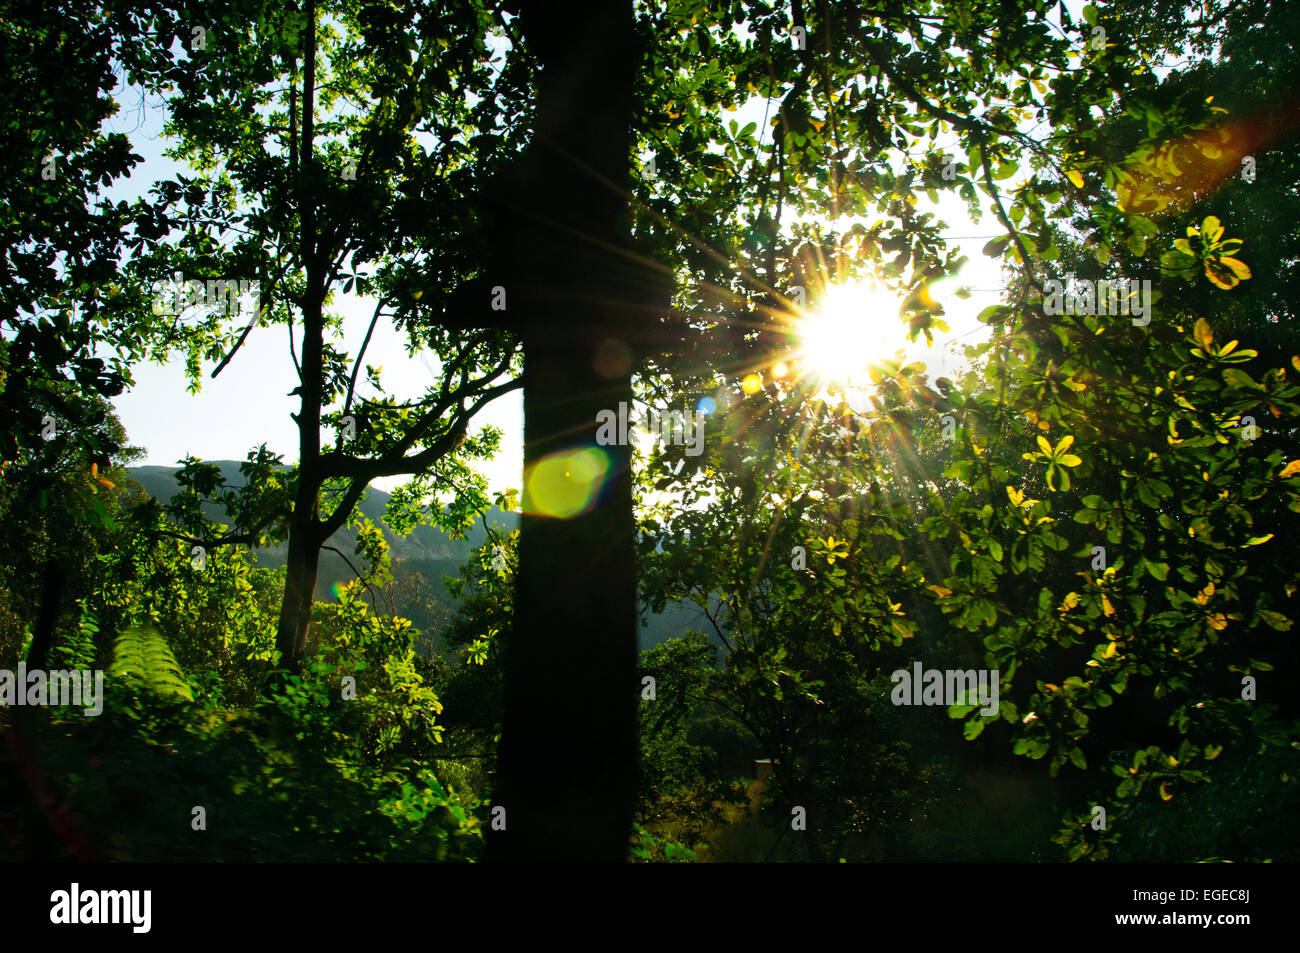 landscape, heaven, trees, green, trunks, sun, god, relax, tranquility, summer, light, road, trip Stock Photo